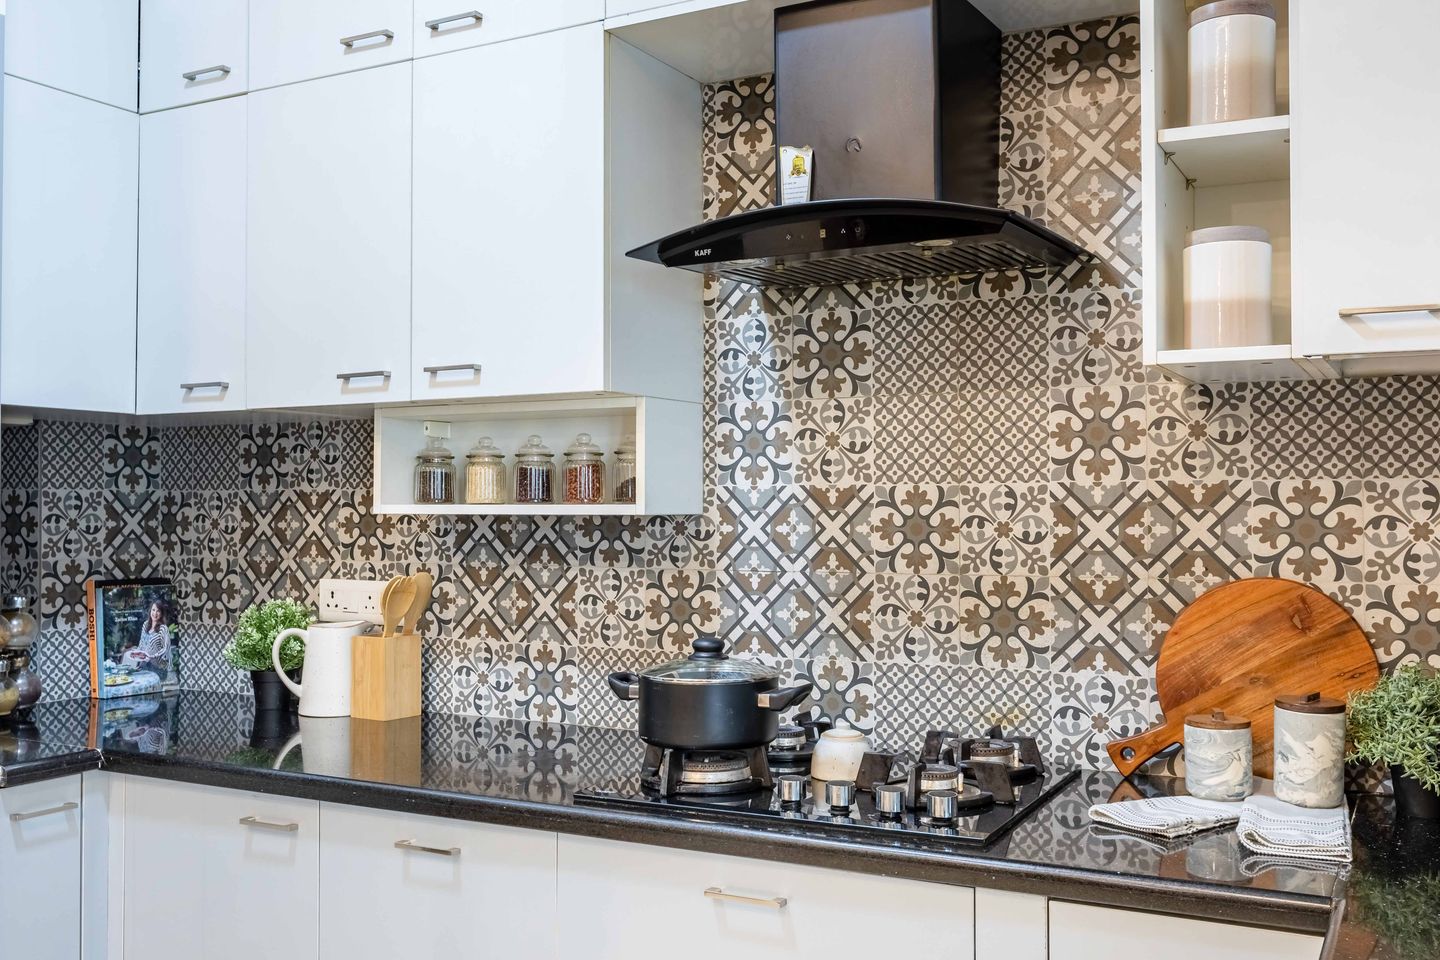 1. Ceramic Modern Brown Grid Tiles For Kitchen - Livspace 2. Modern Brown Ceramic Matte Tiles In U-Shaped Kitchen - Livspace